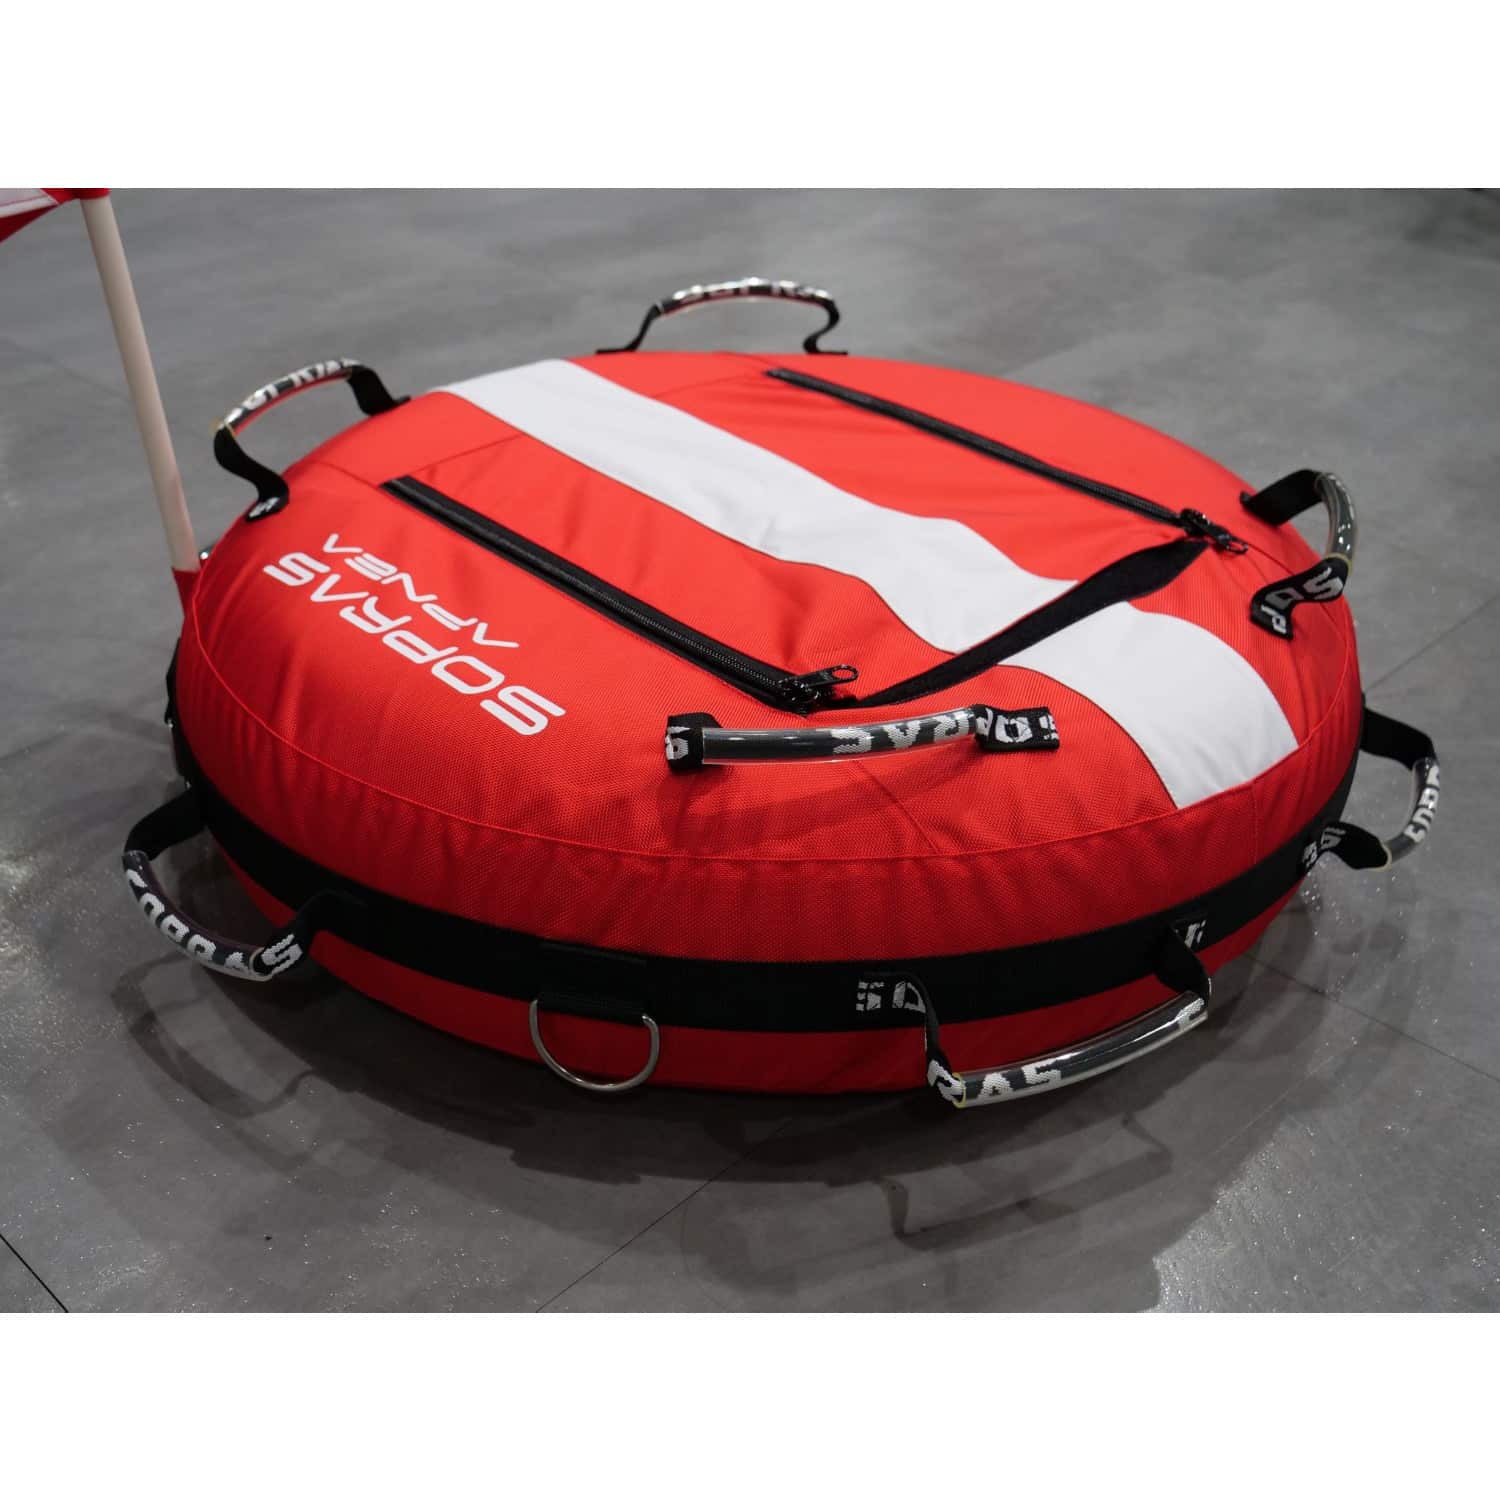 DIVE CENTER freediving buoy - Sopras Apnea